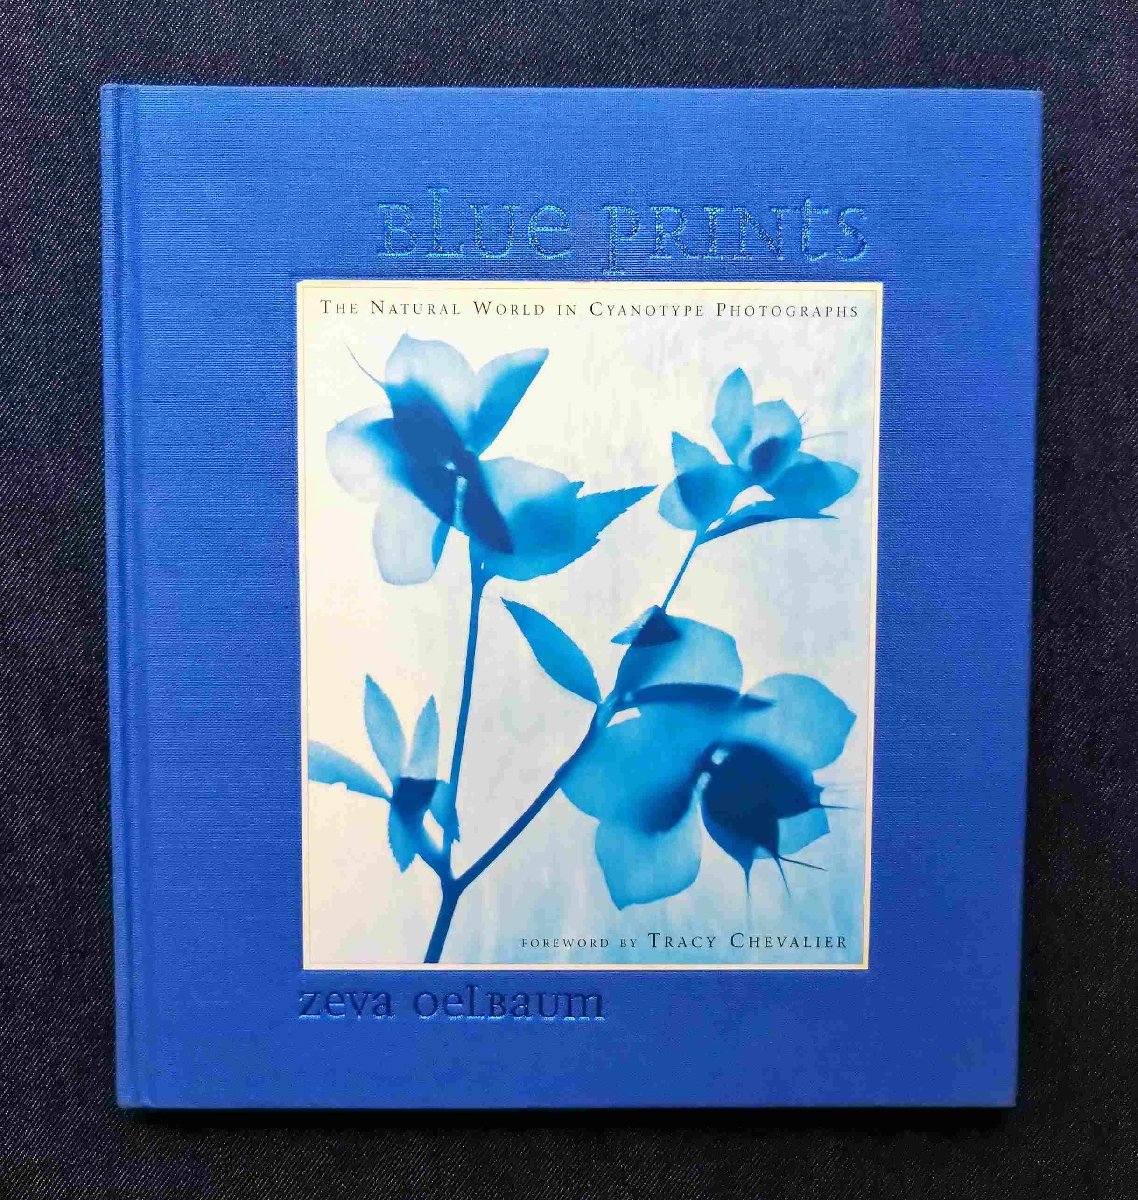 Zeva Oelbaum Blue Prints サイアノタイプ 洋書写真集 植物標本 ブループリント The Natural World in Cyanotype Photographs